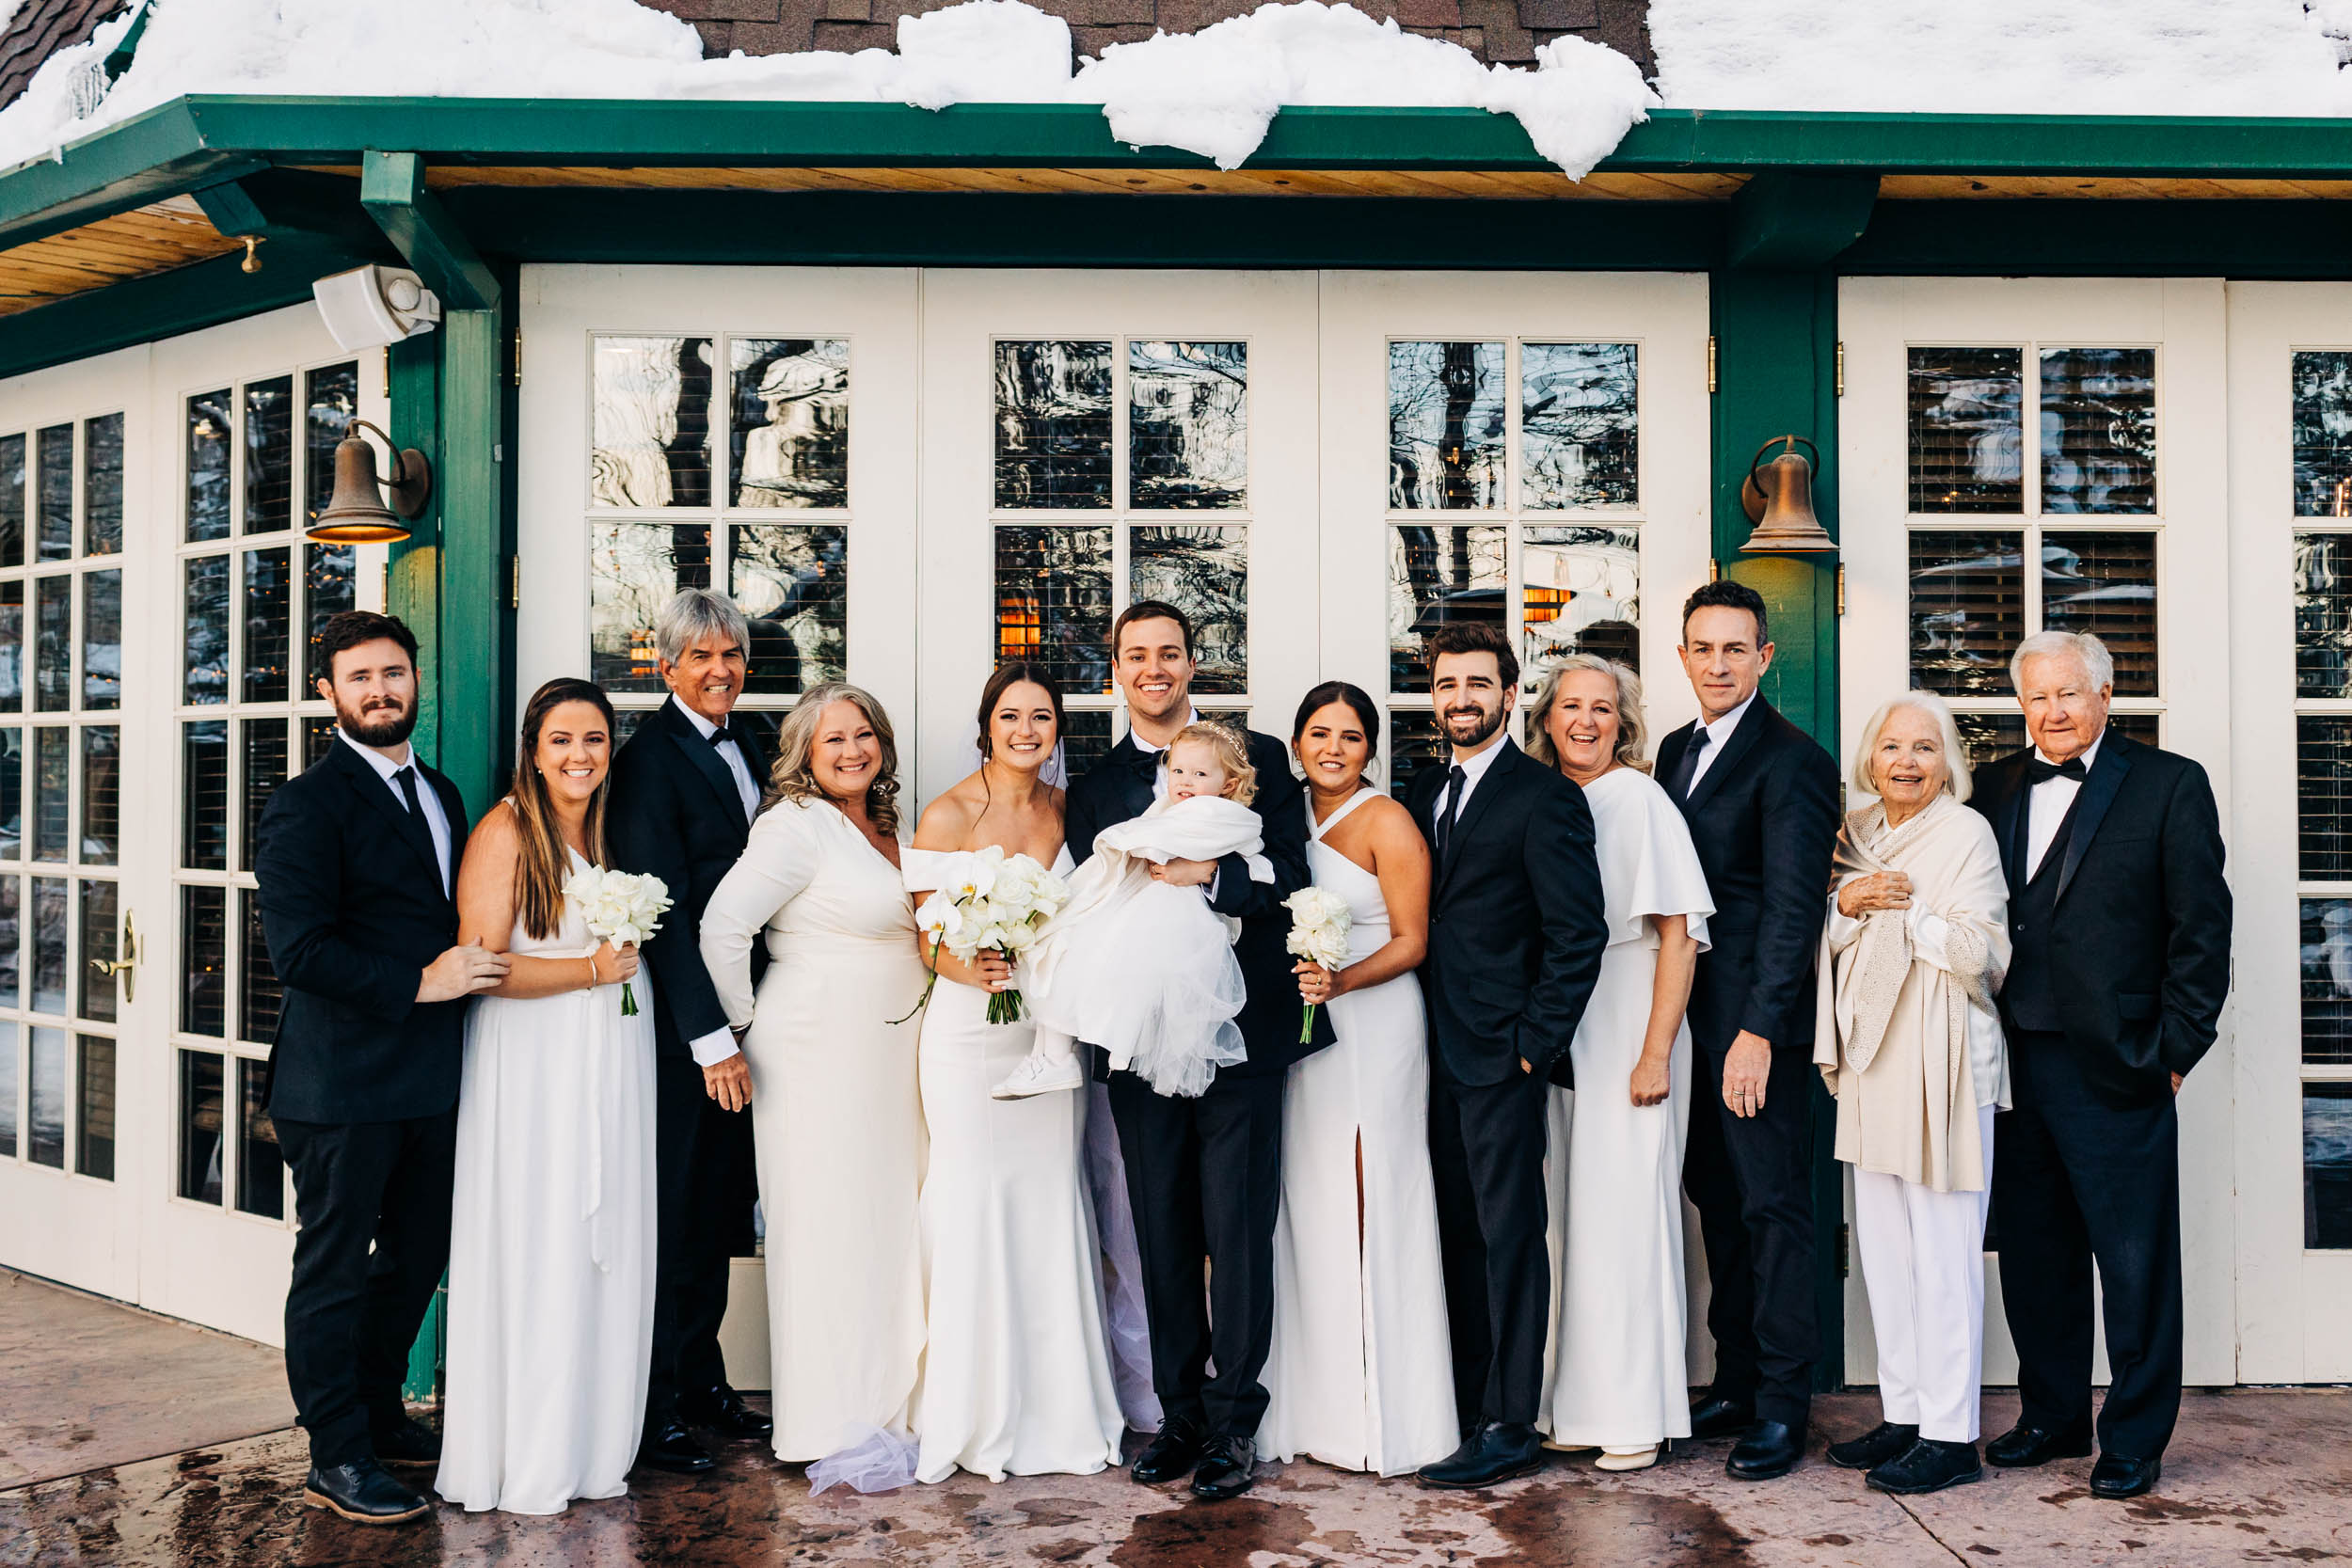 Family photos at Greenbriar Inn winter wedding